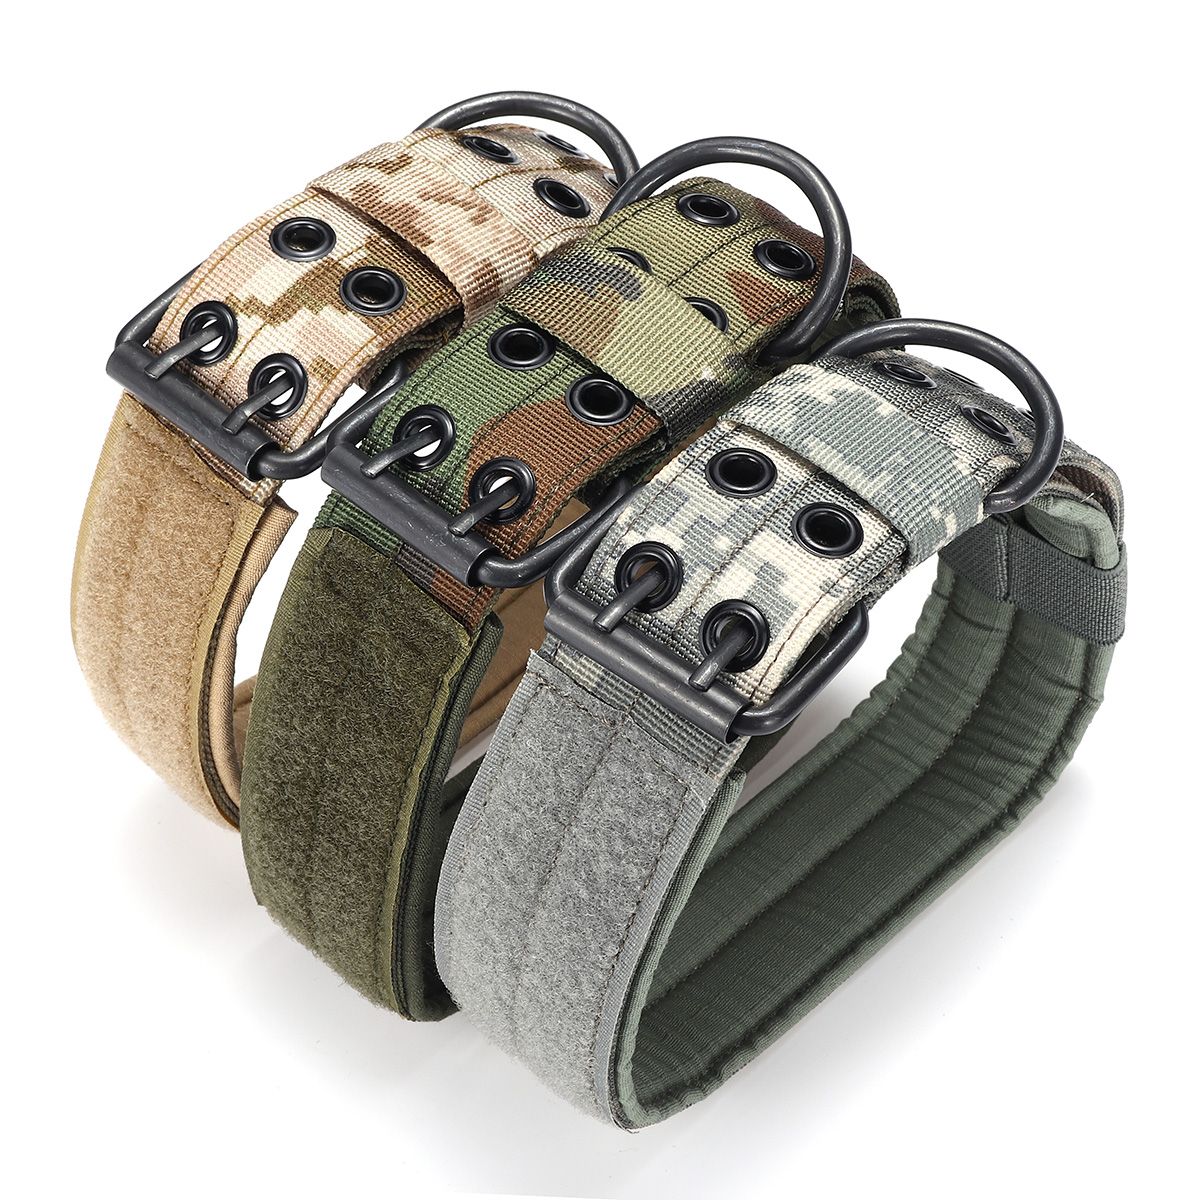 M-Tactical-Military-Adjustable-Dog-Training-Collar-Nylon-Leash-wMetal-Buckle-1393987